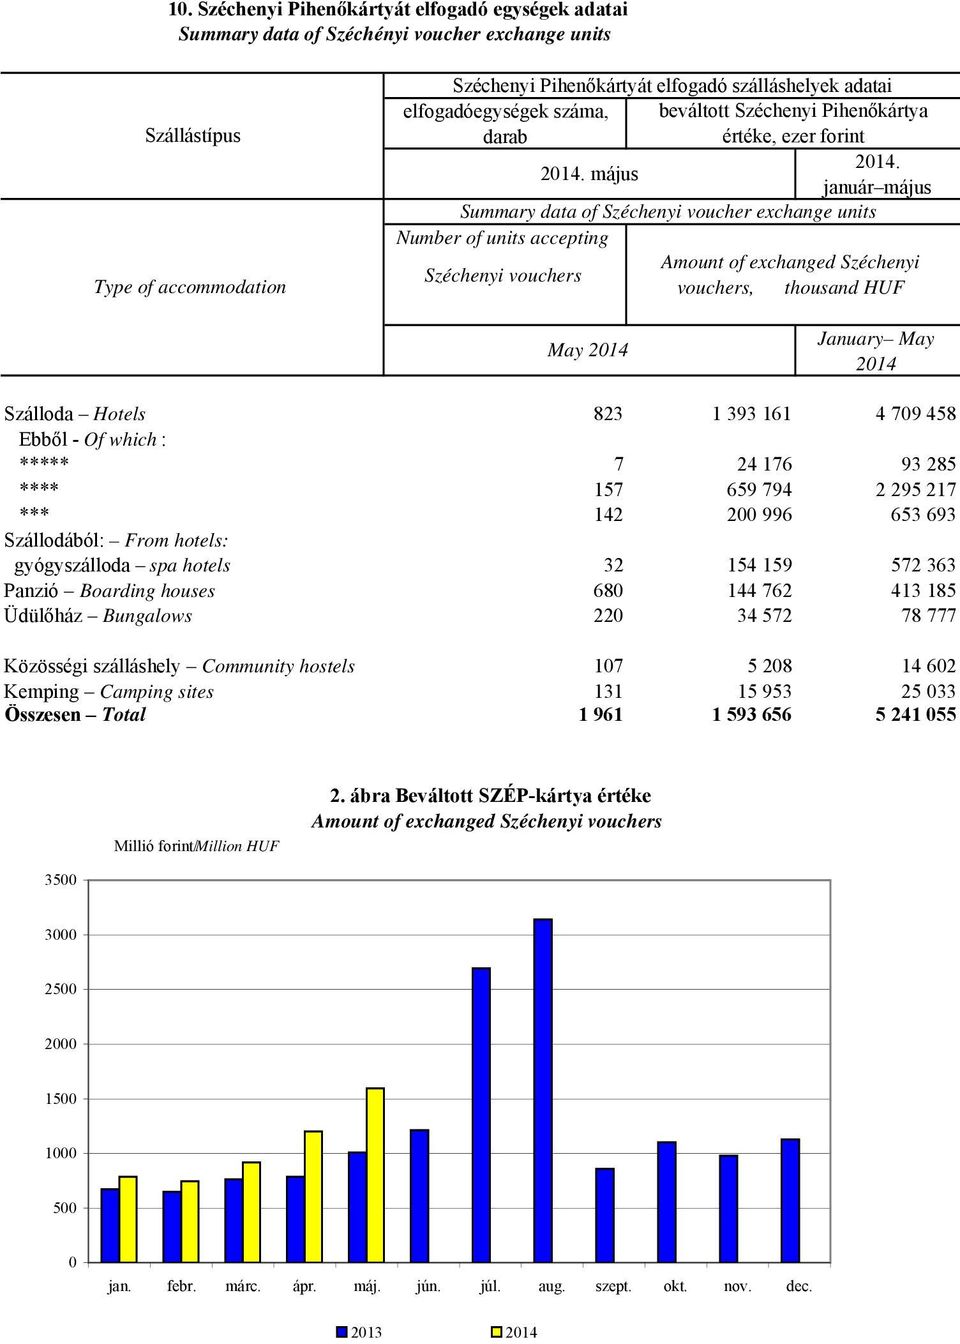 2014. május január május Summary data of Széchenyi voucher exchange units Number of units accepting Széchenyi vouchers Amount of exchanged Széchenyi vouchers, thousand HUF May 2014 January May 2014